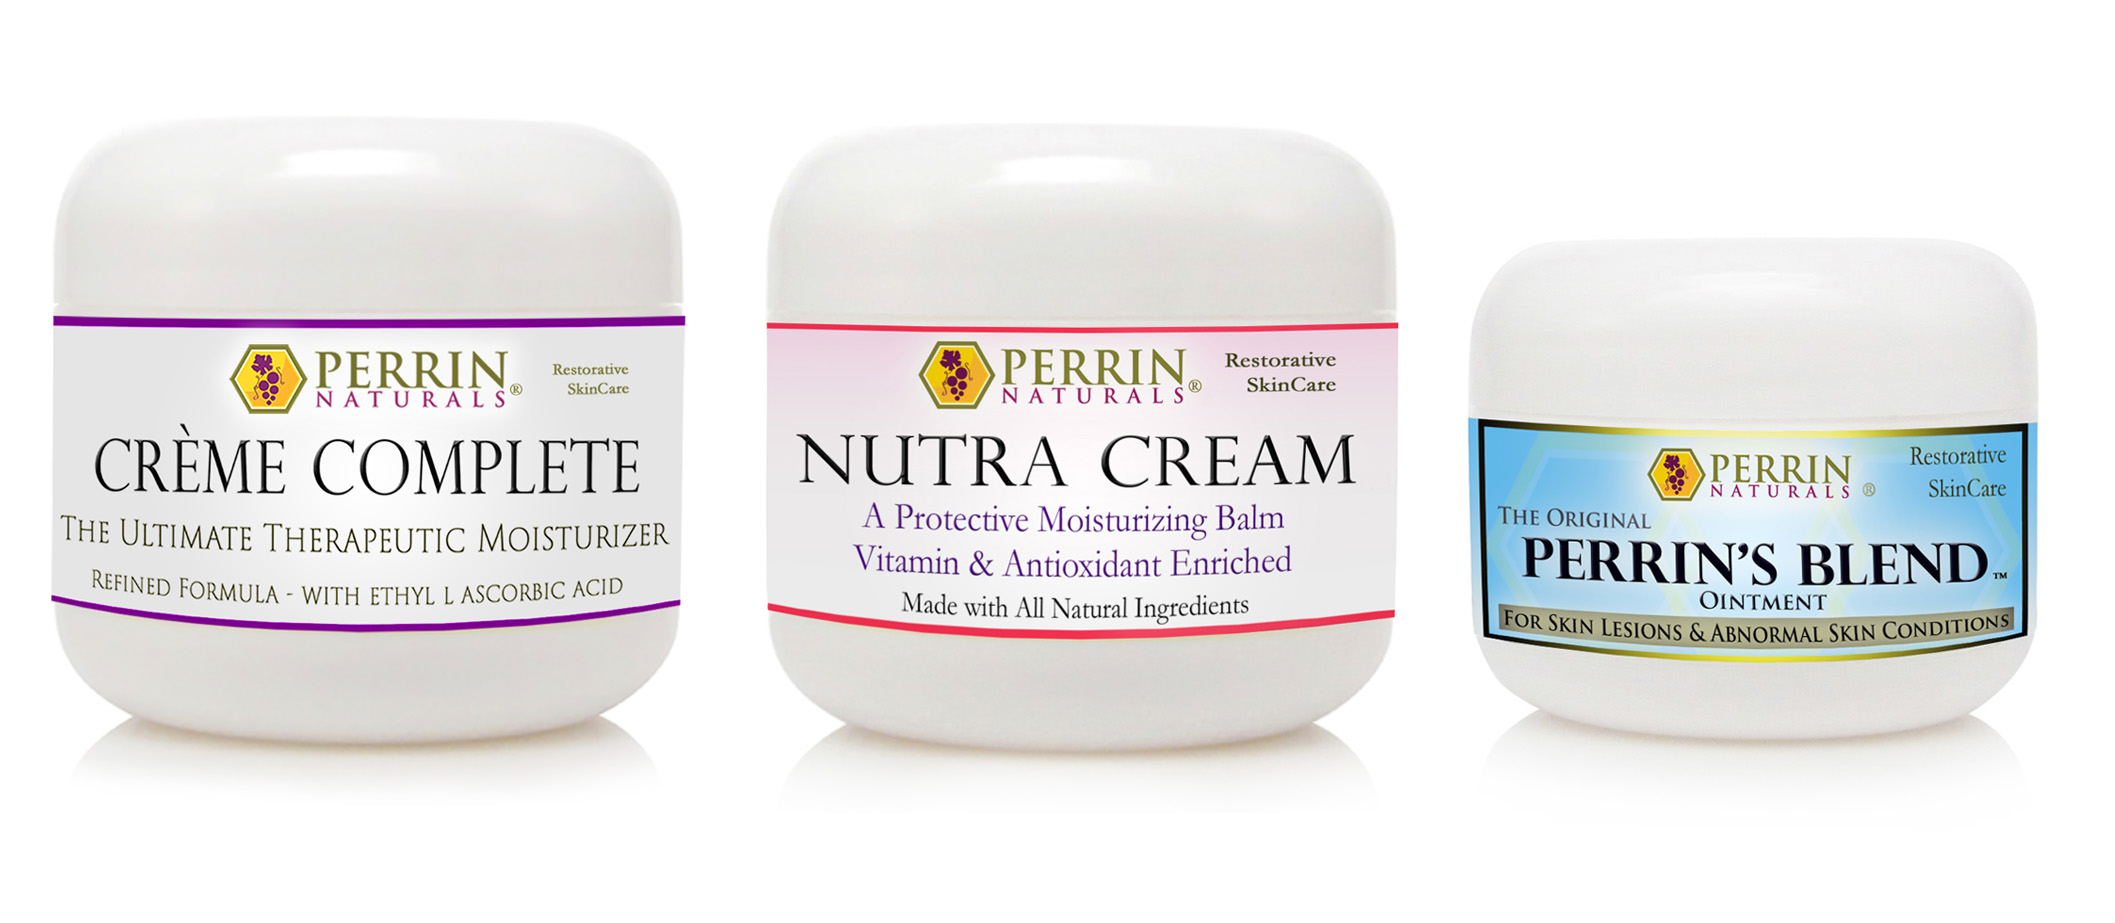 Creme Complete Refined, Nutra Cream, Perrin's Blend for Lichen Sclerosus